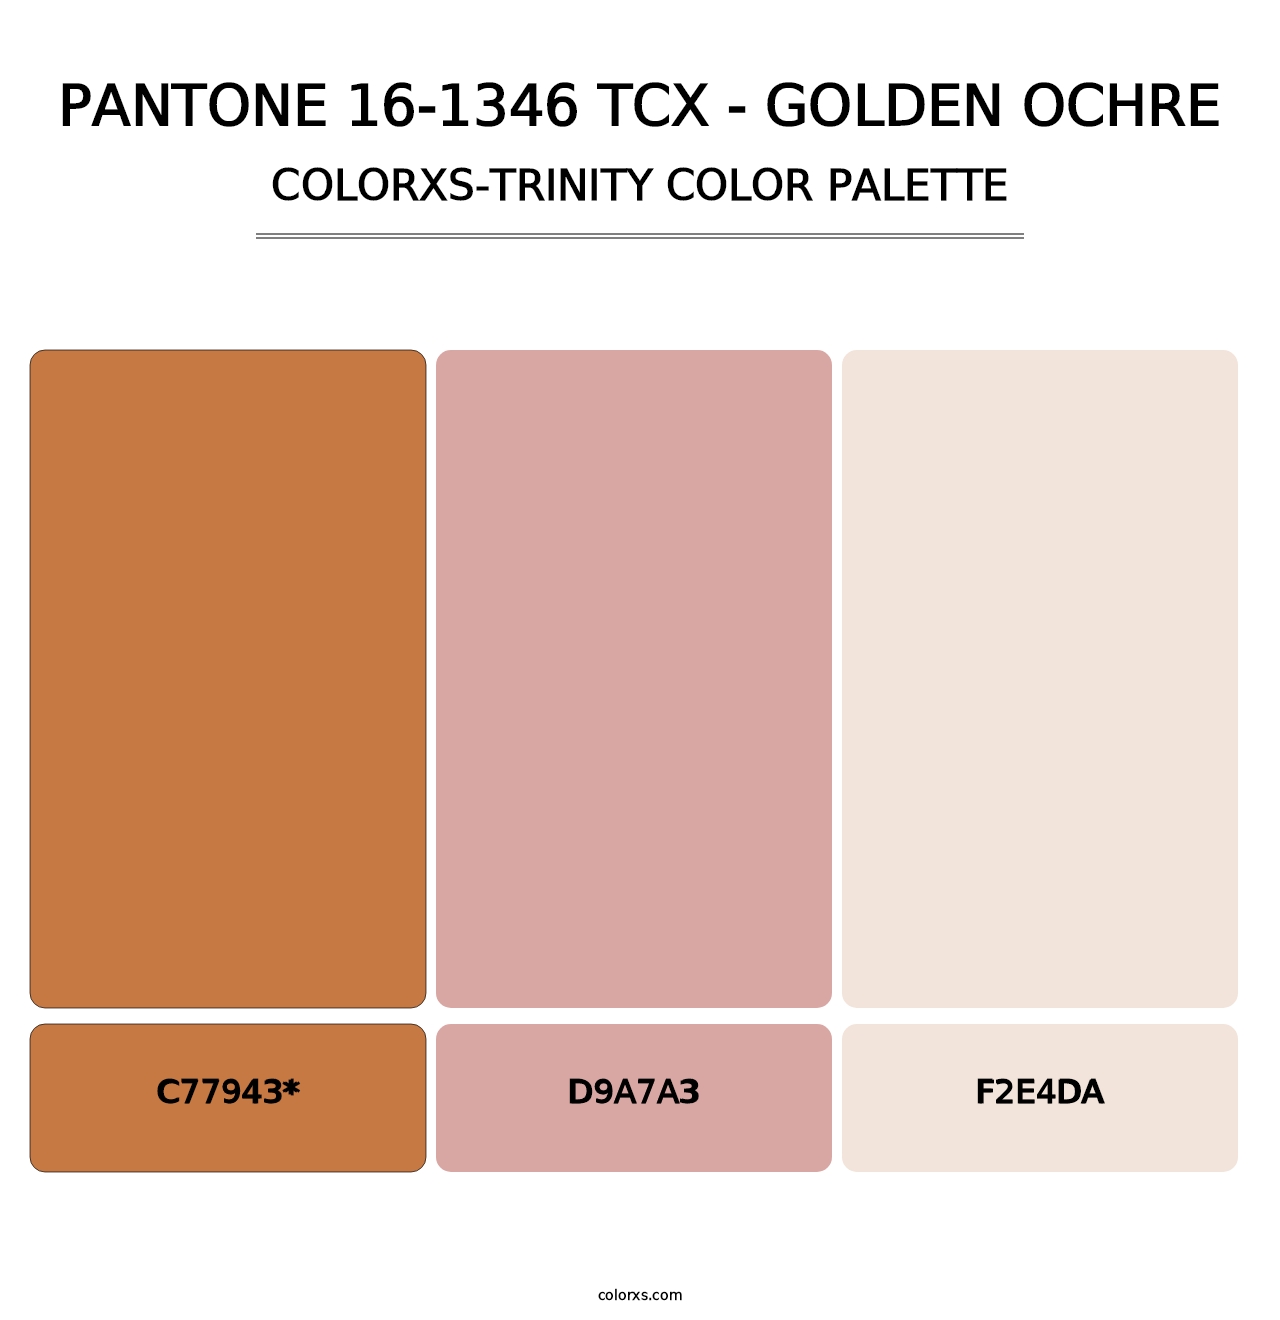 PANTONE 16-1346 TCX - Golden Ochre - Colorxs Trinity Palette